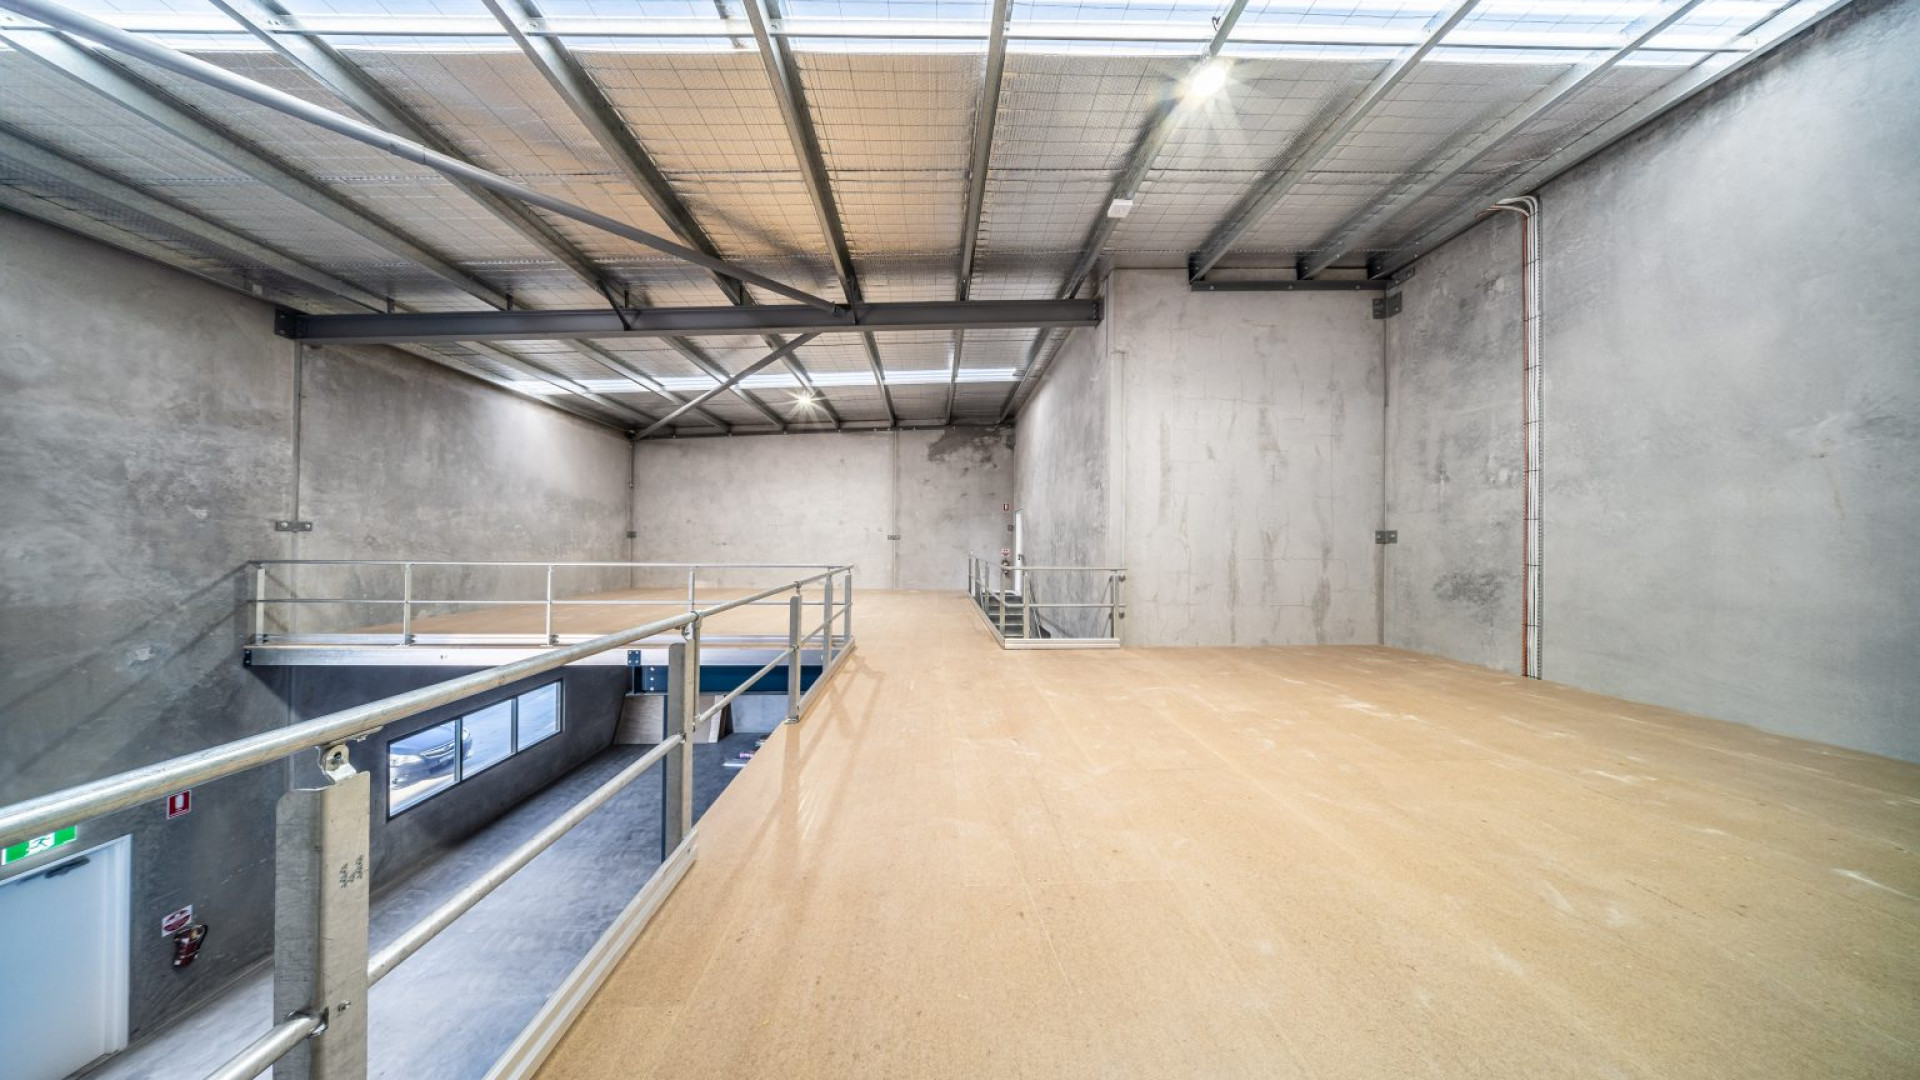 Mezzanine Floor Installation Advantages and Disadvantages